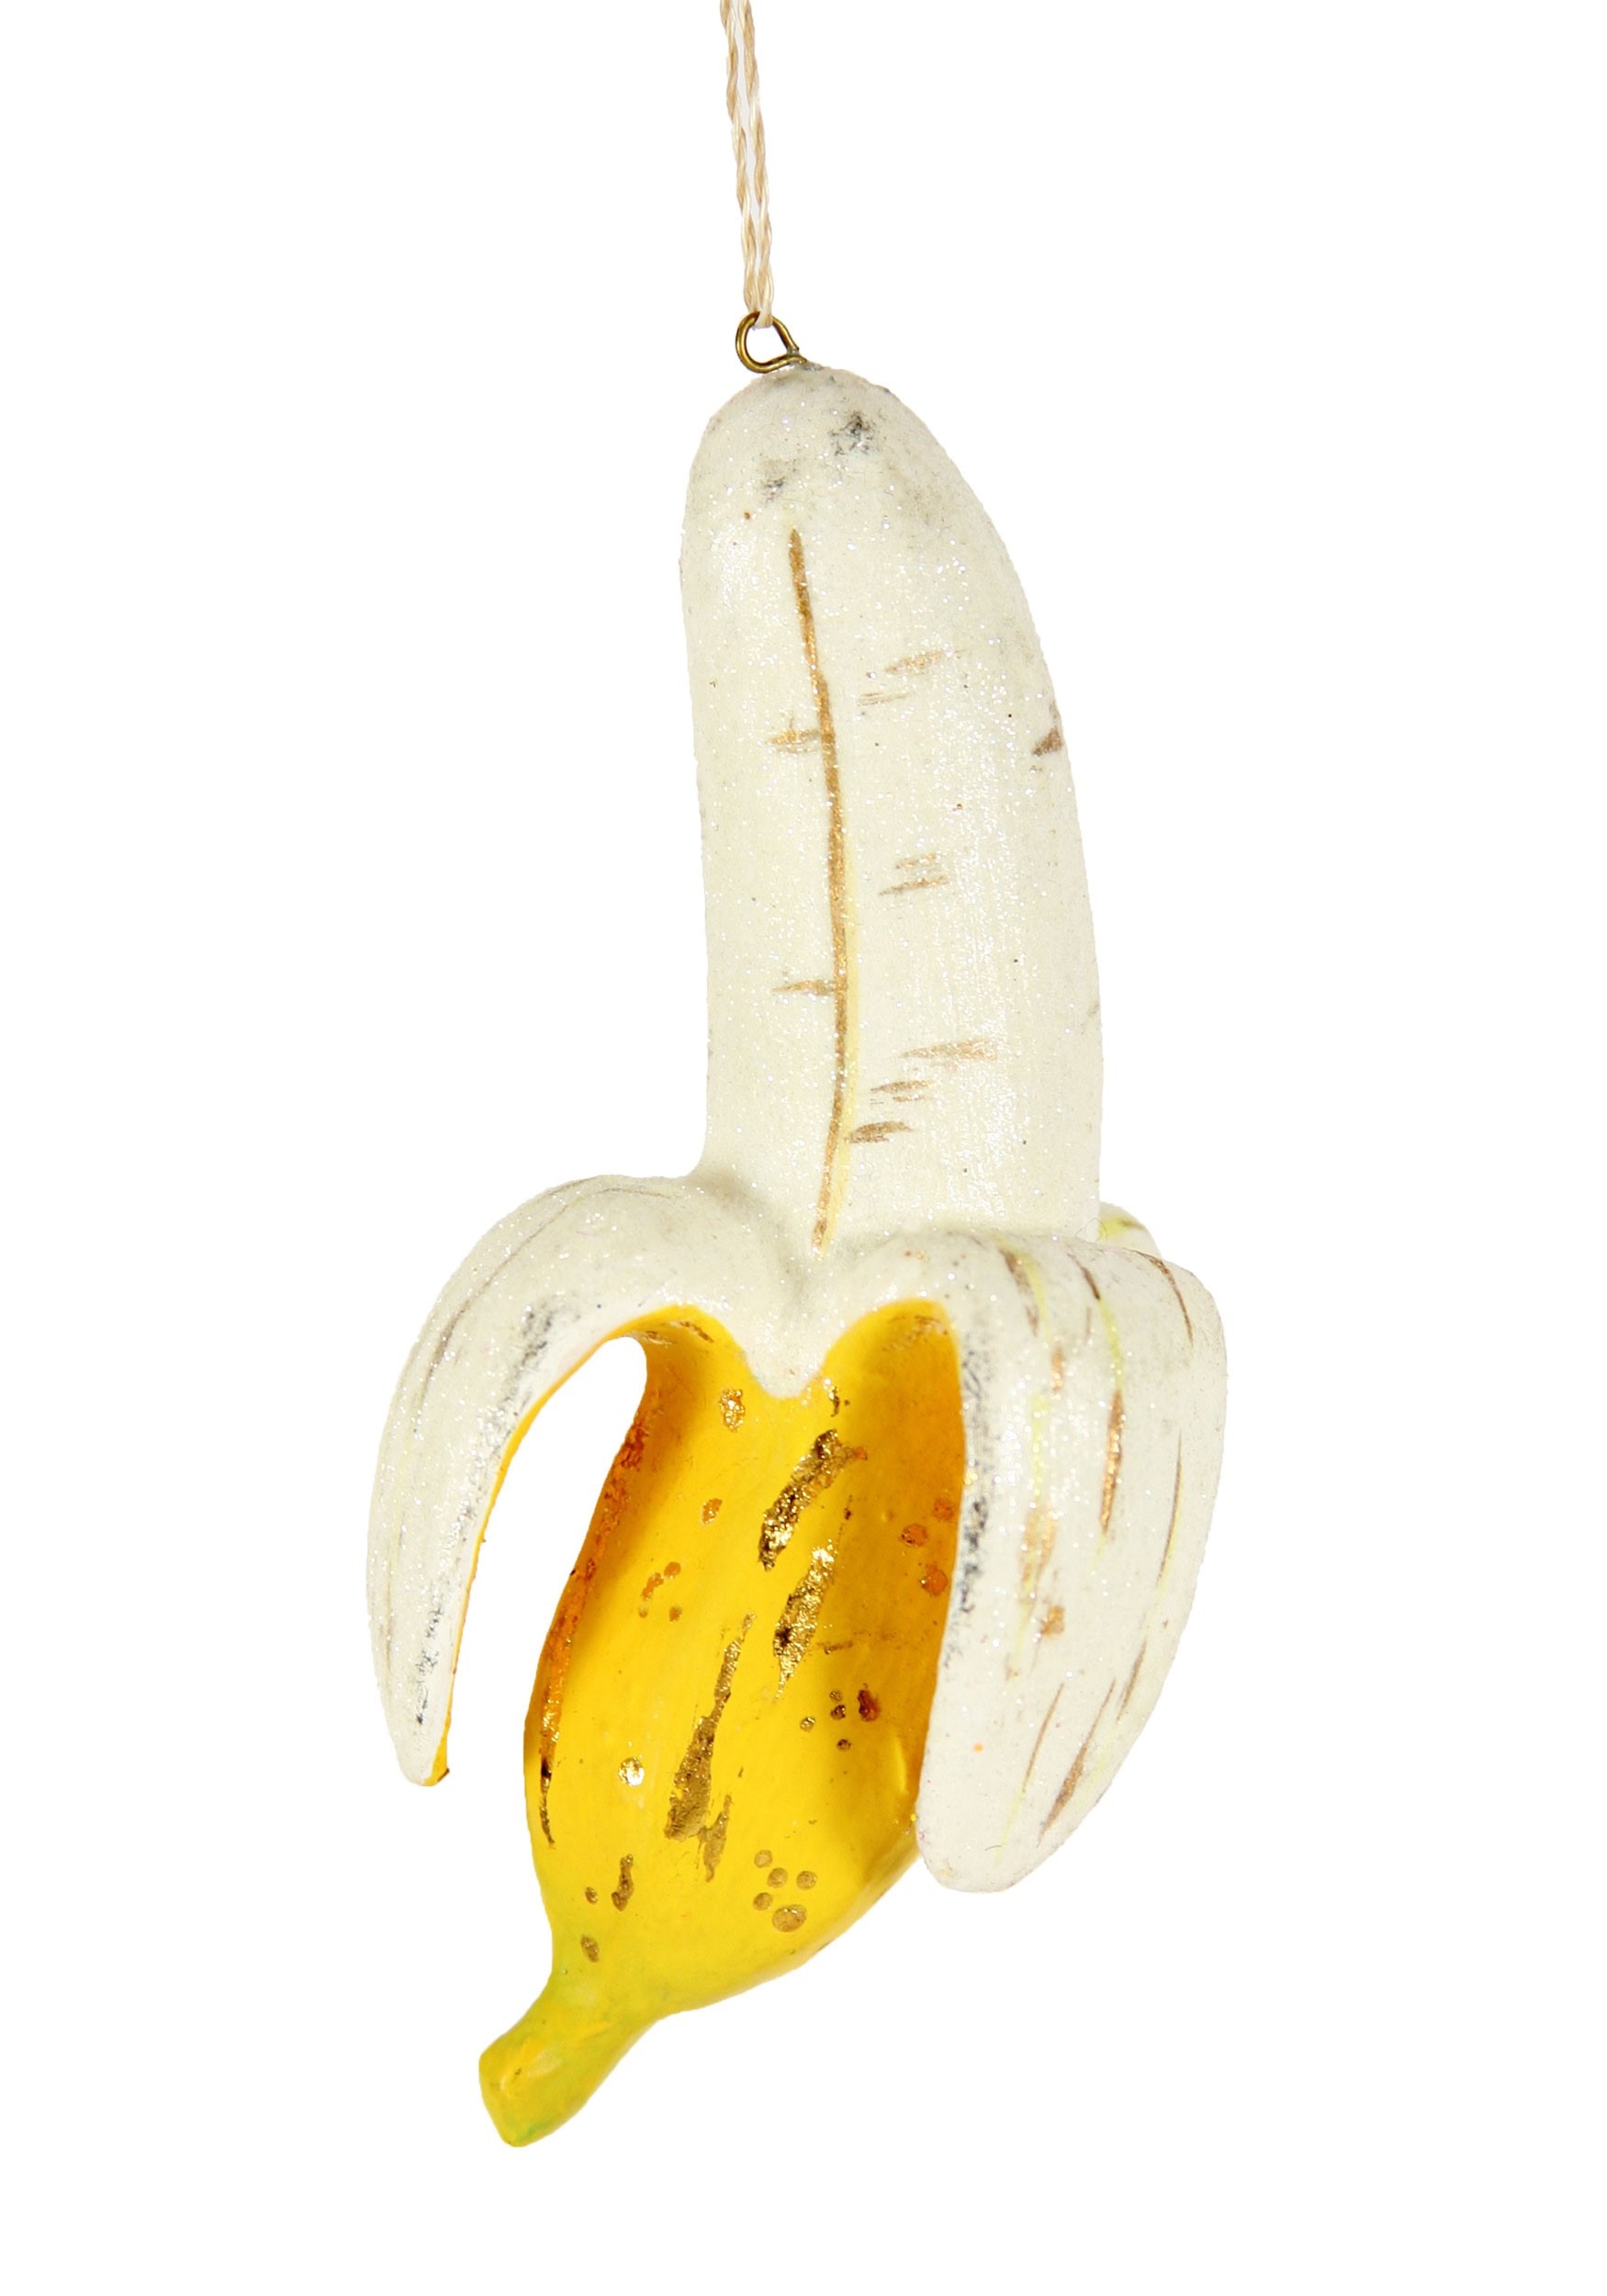 A Peeled Banana Christmas Ornament